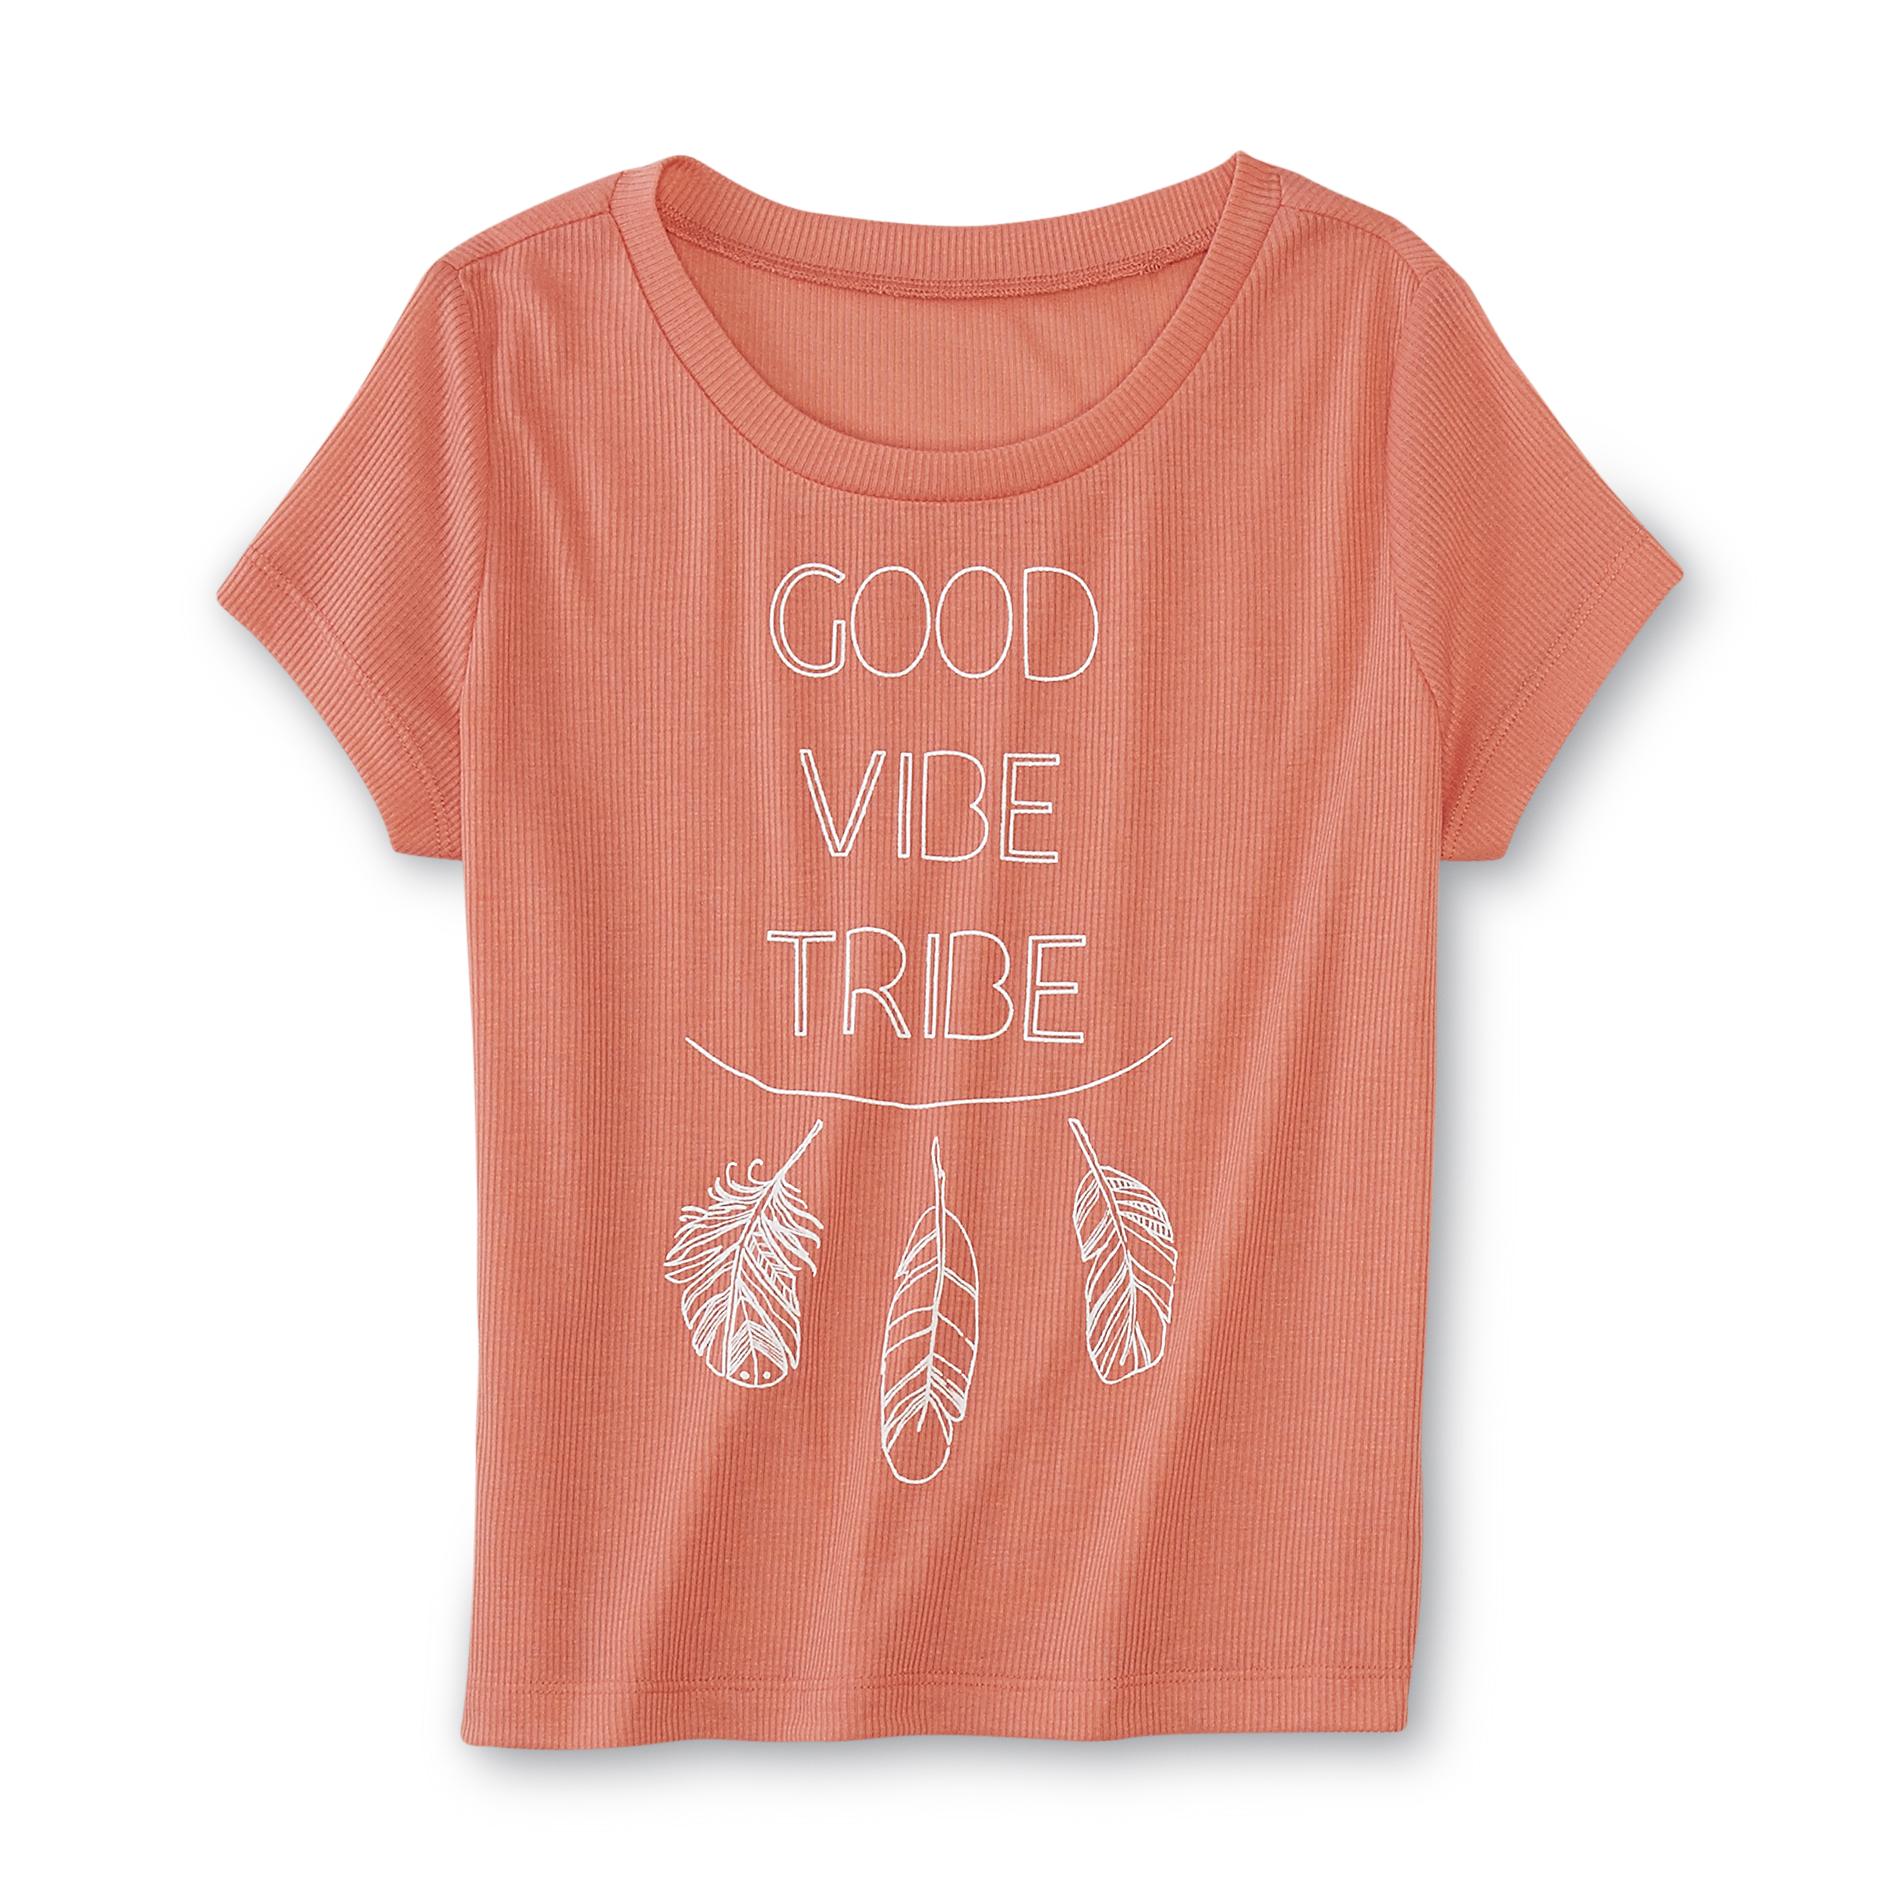 Simply Styled Girl's Rib Knit Graphic T-Shirt - Good Vibe Tribe